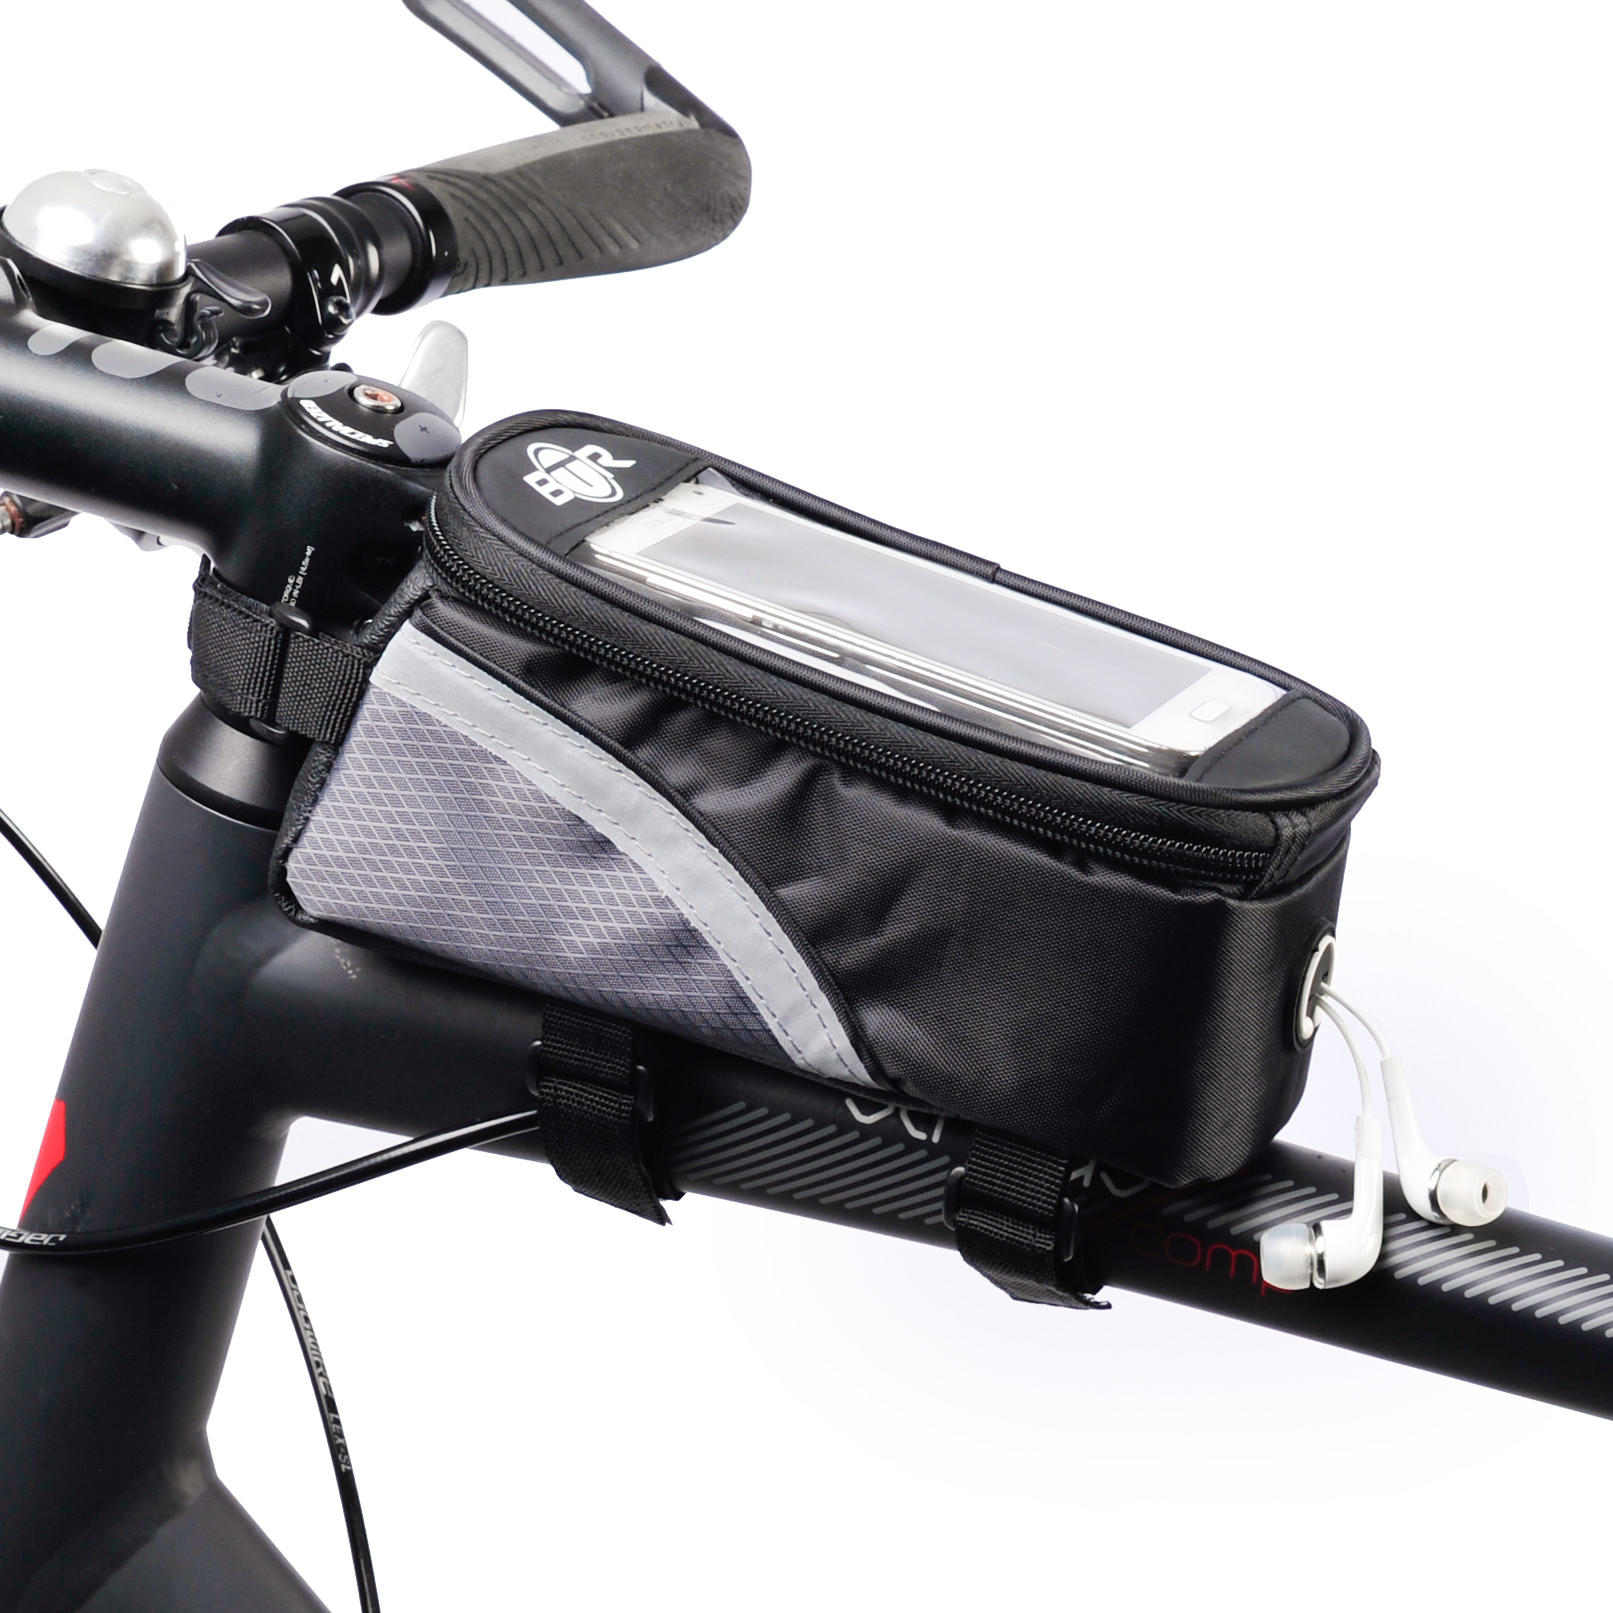 BTR Bike Frame Bag With Mobile Phone Holder, Bike Phone Mount.